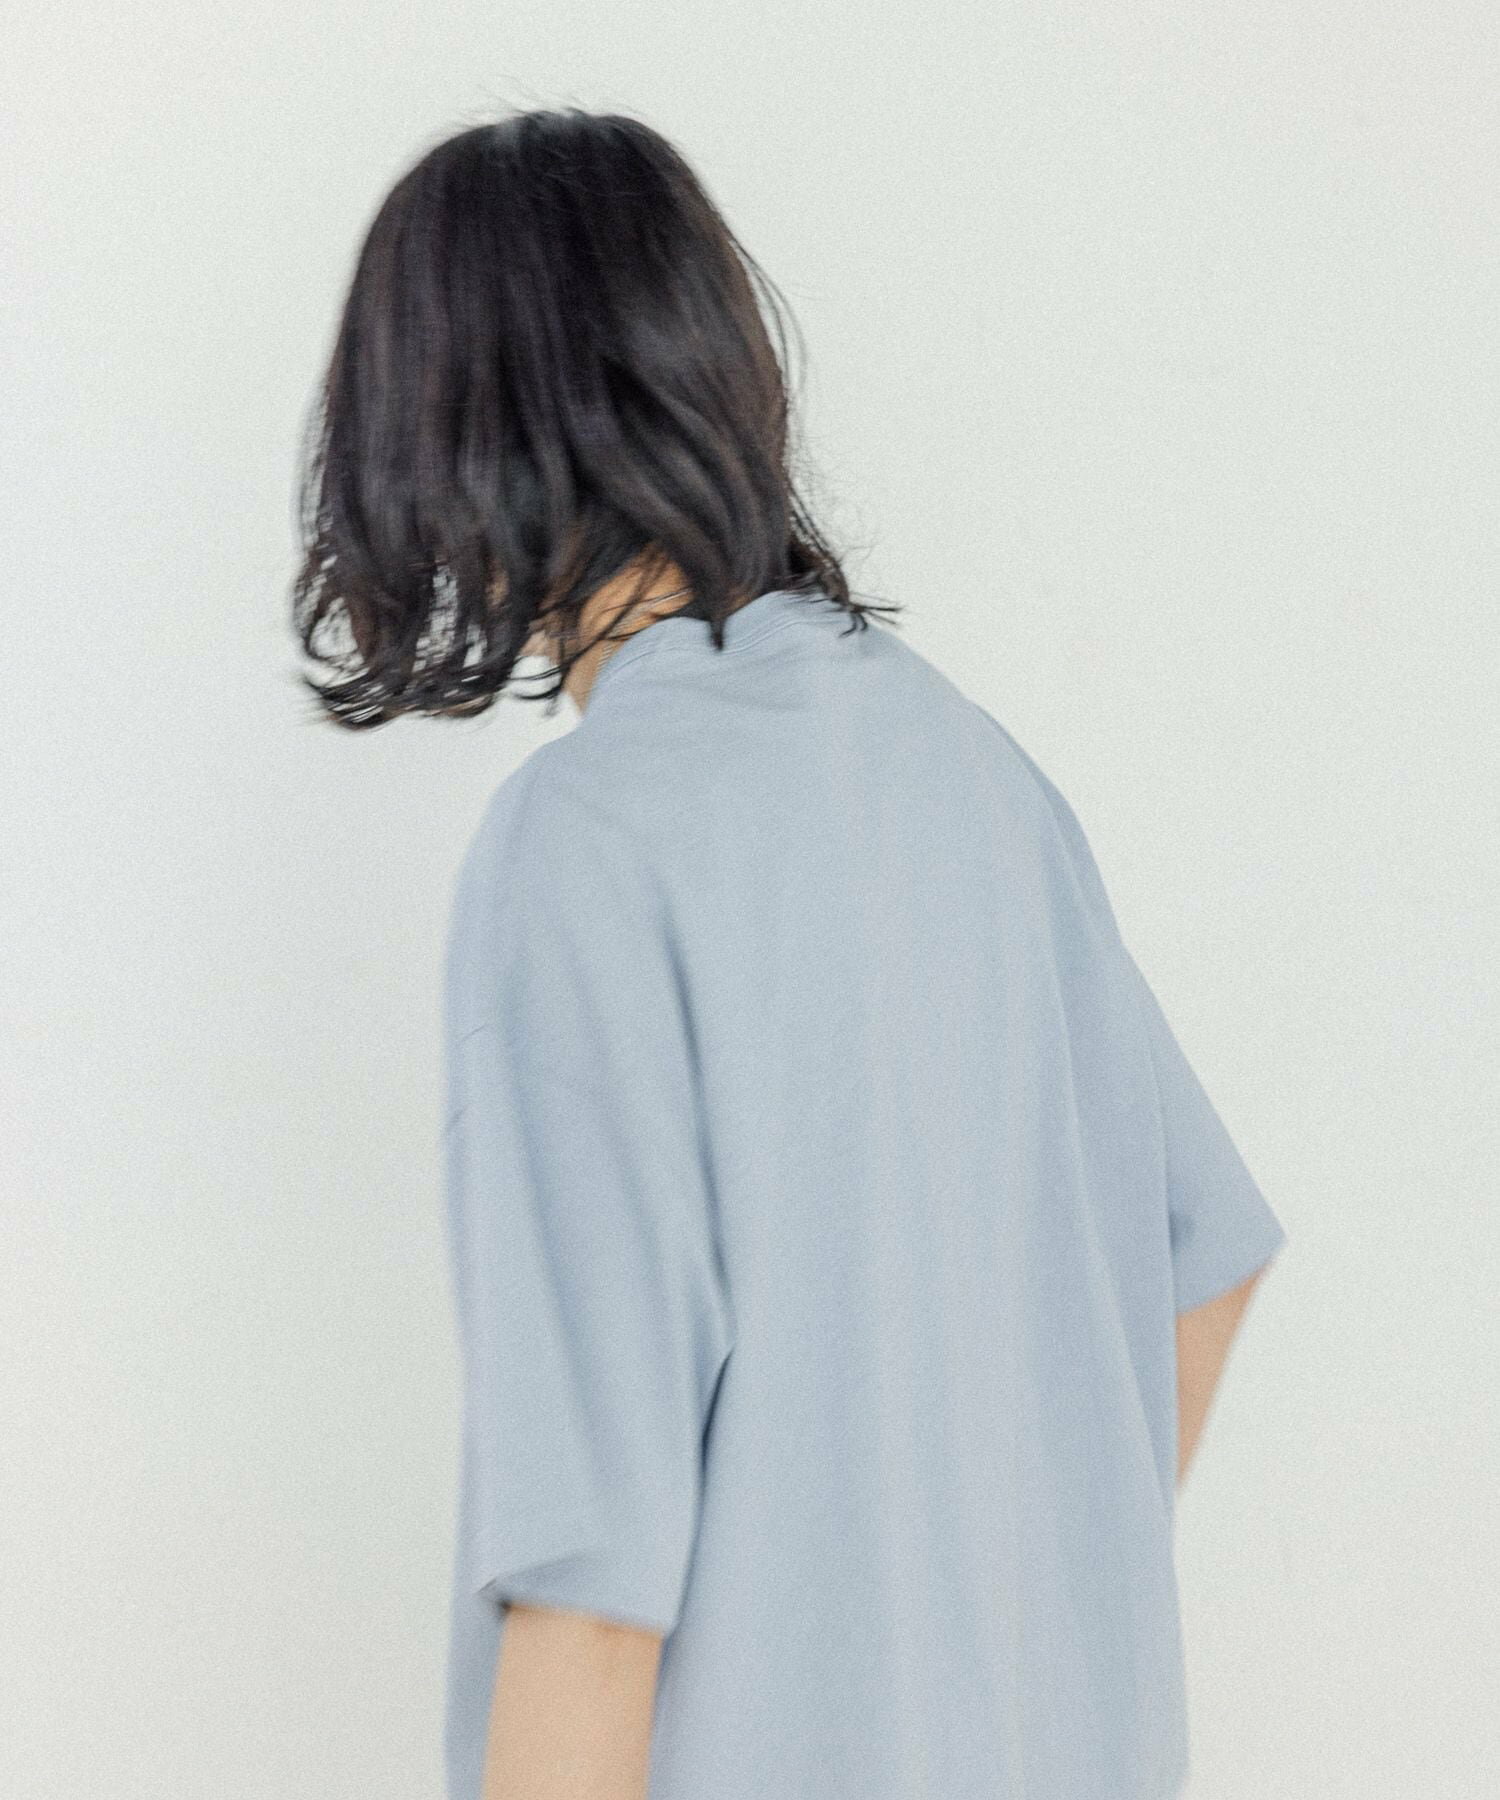 【SIGNAL SPORTS】ワンポイント刺繍/天竺コットンルーズTシャツ